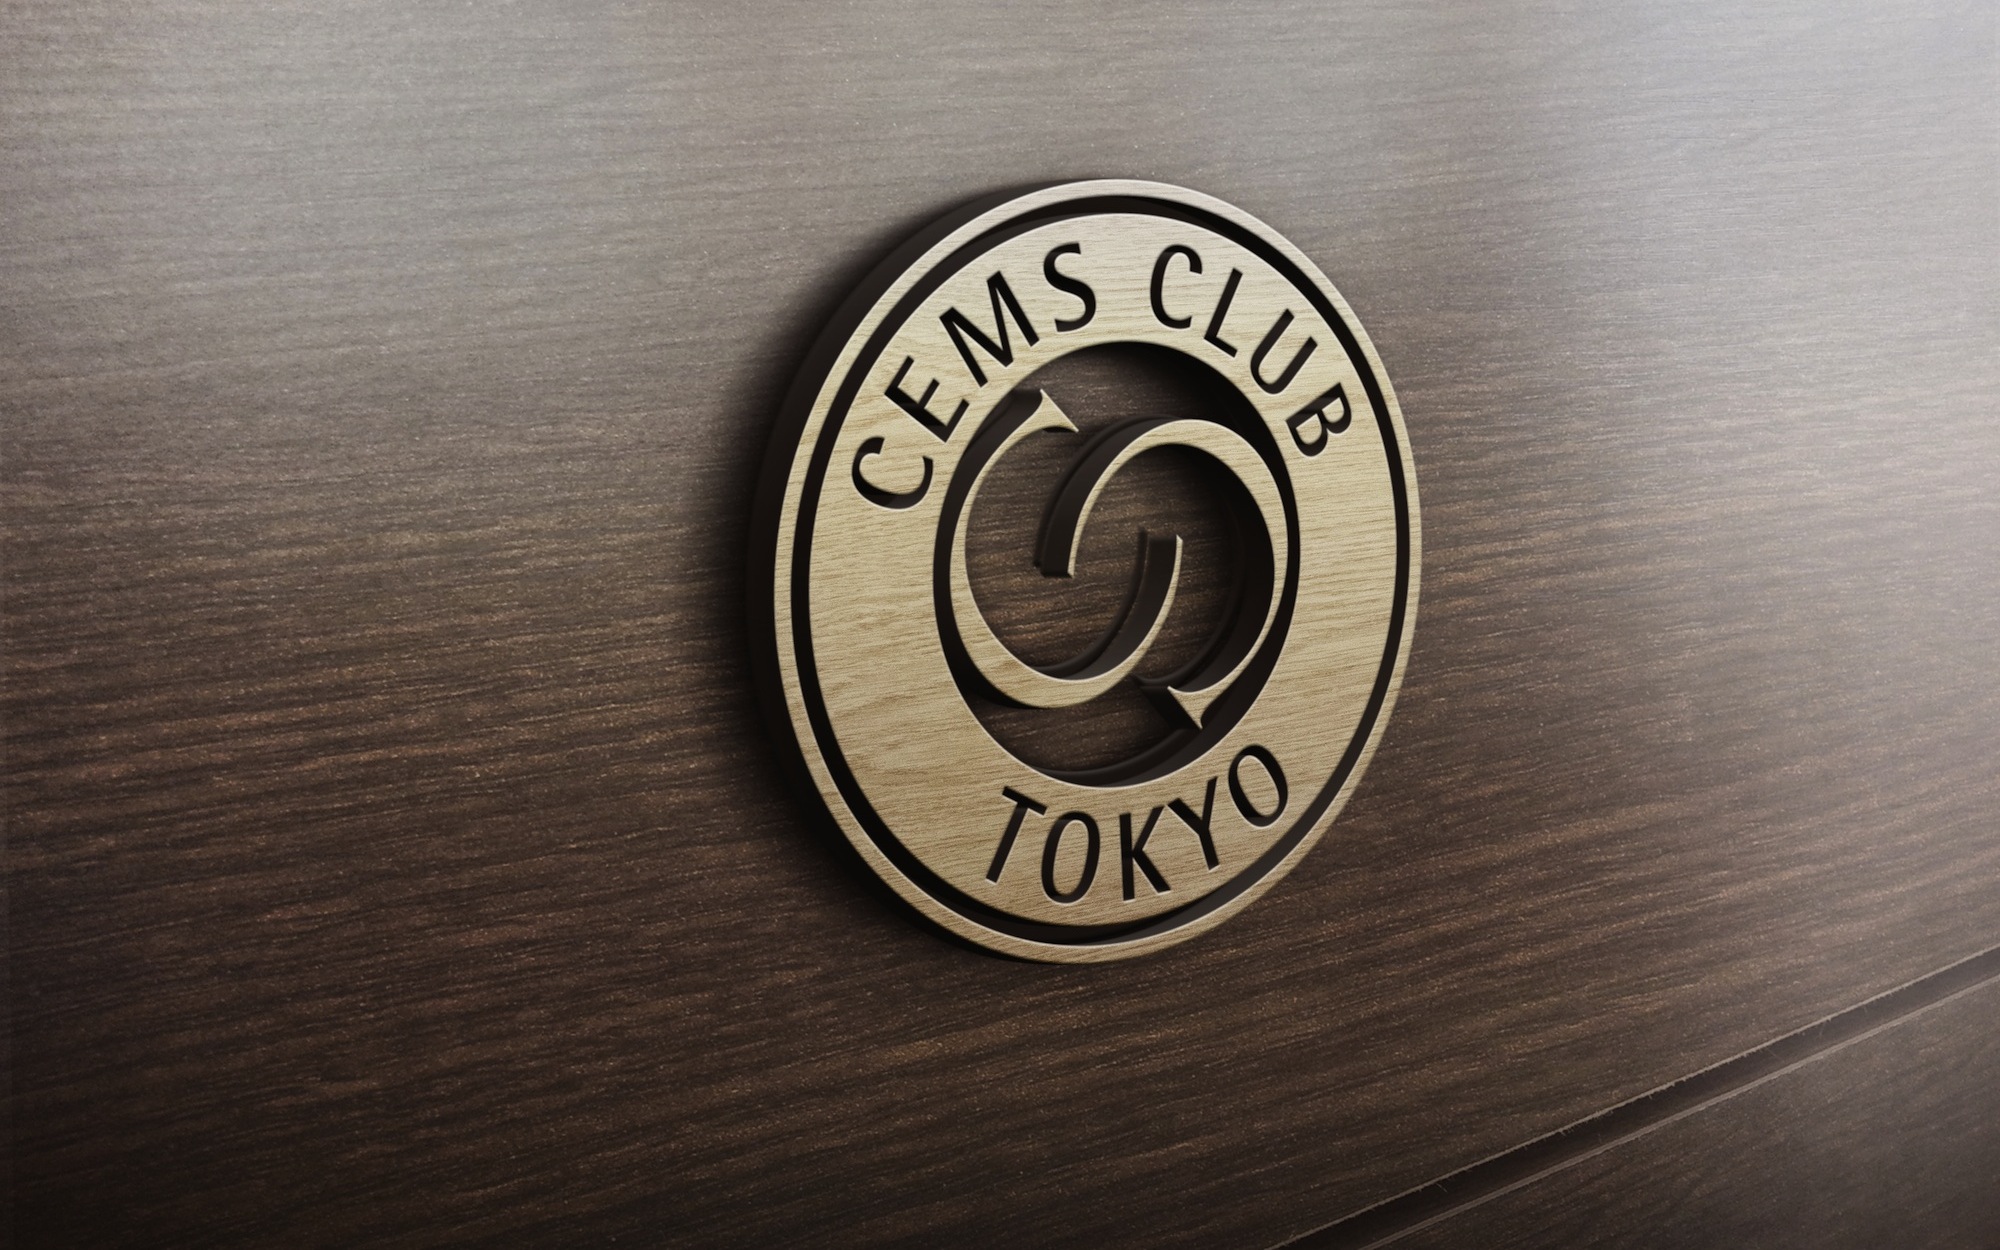 cems club tokyo